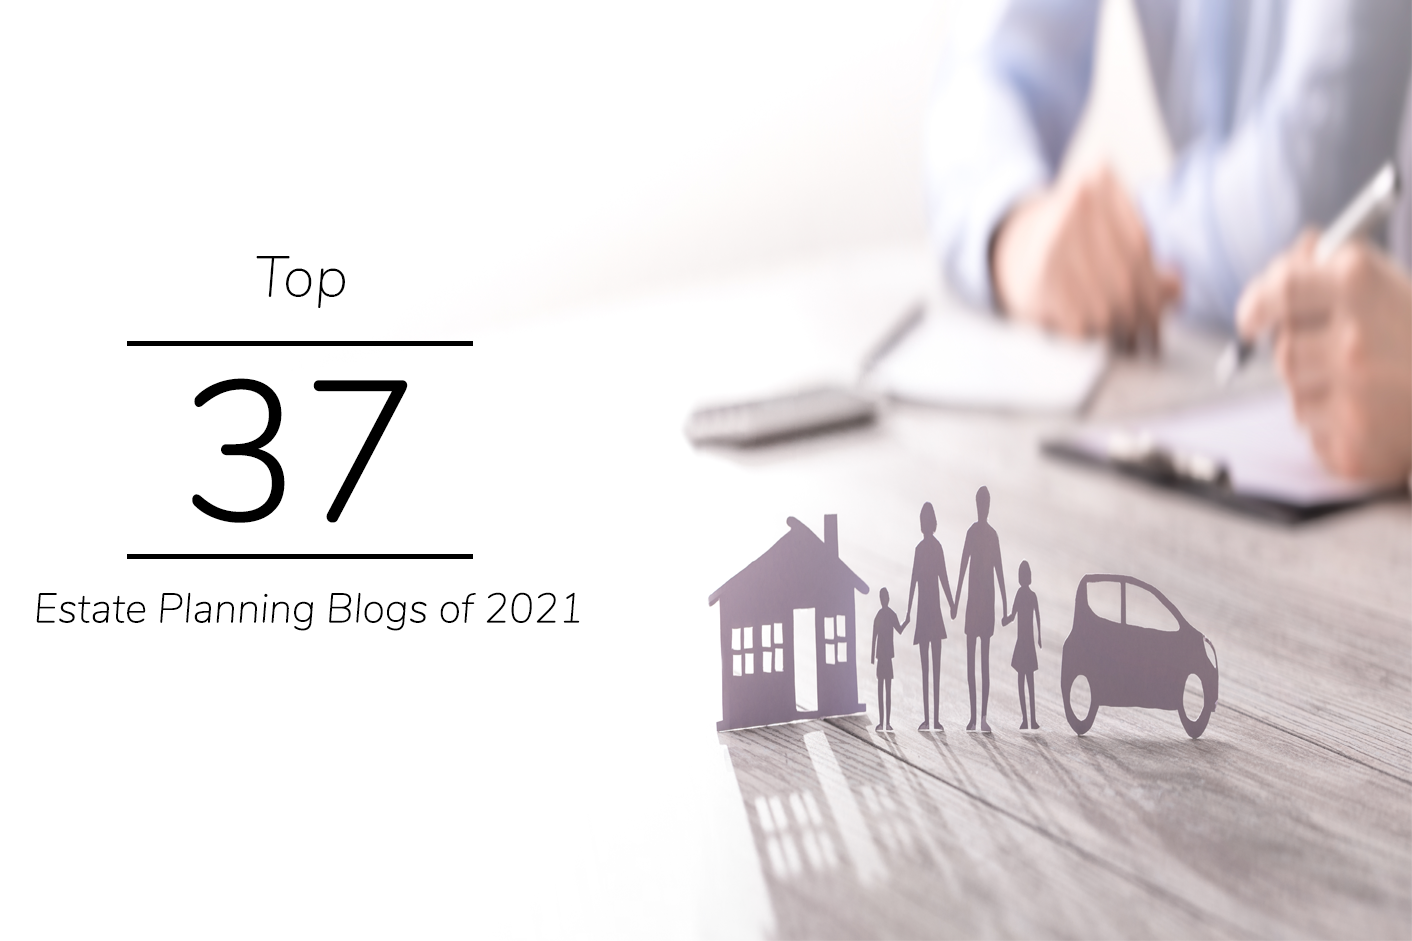 Top Estate Planning Blogs, Best Estate Planning Blogs, Estate Planning Blogs, Best Estate Planning Blogs, Best Estate Planning Blogs of 2021, Estate Planning Planning